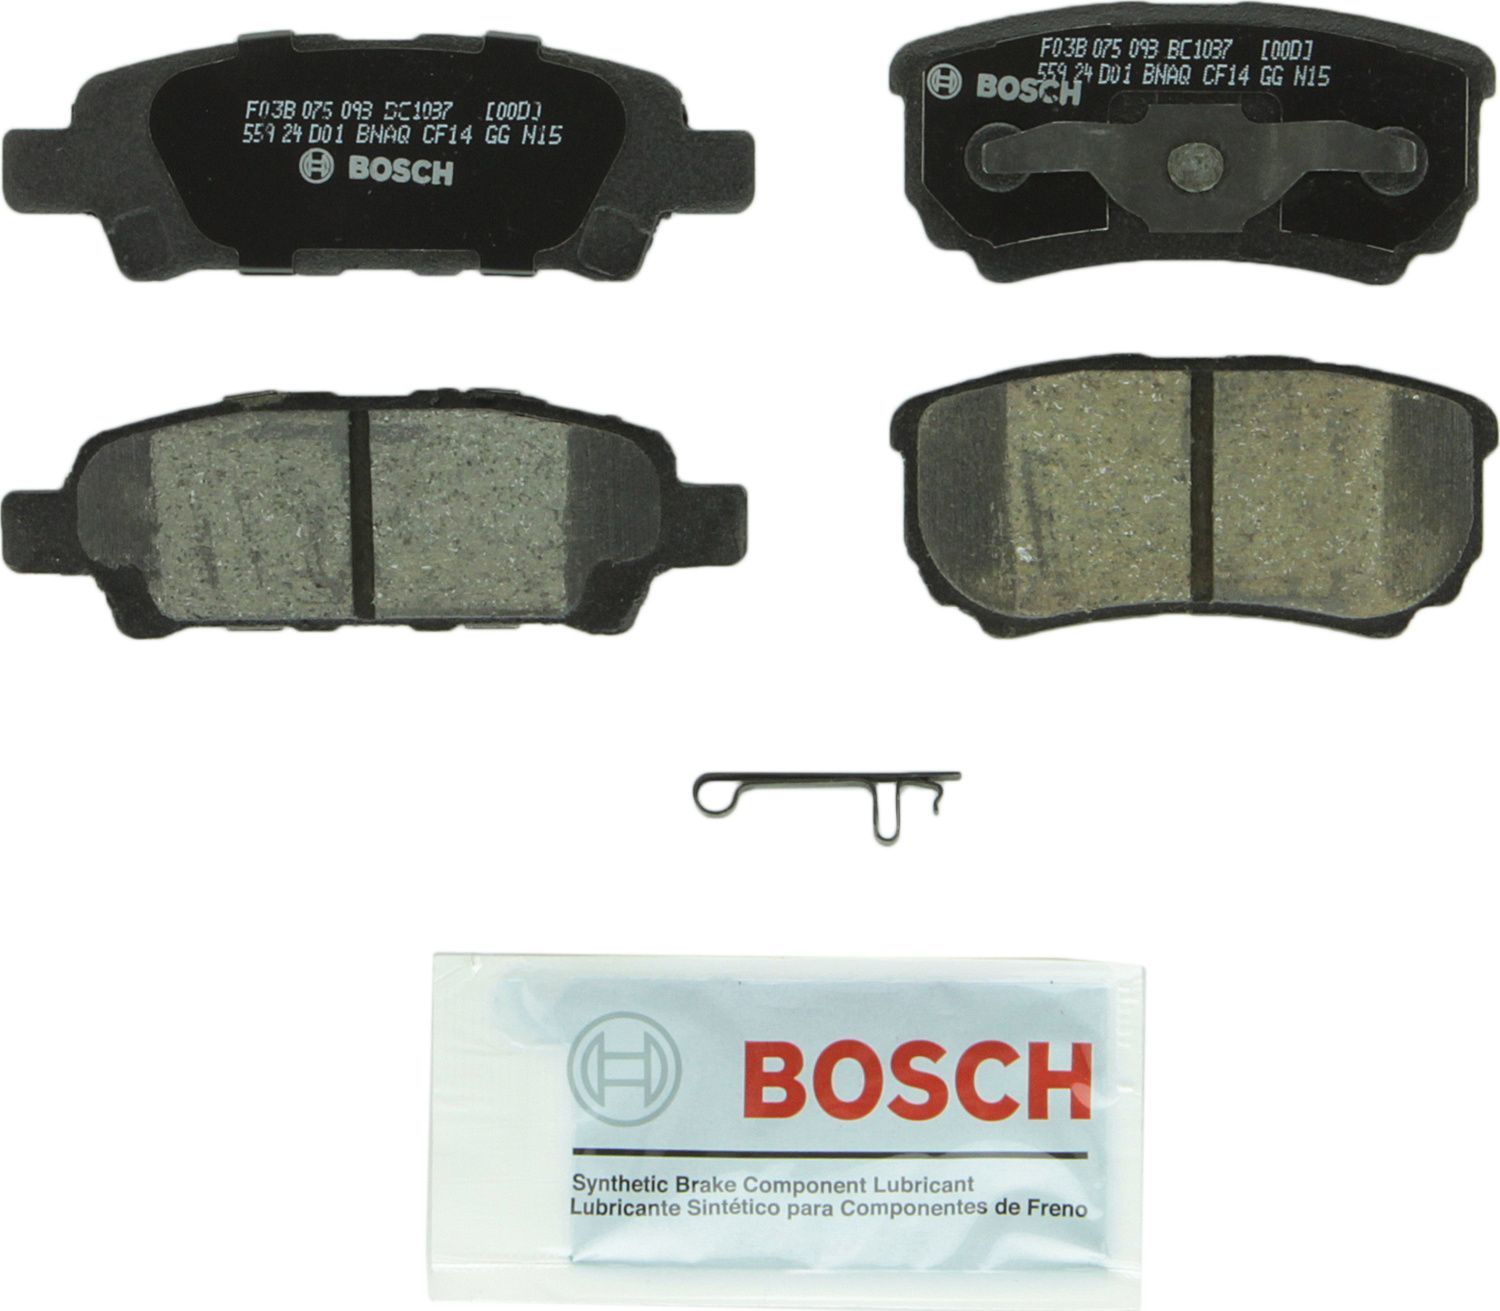 BOSCH BRAKE - Bosch QuietCast Brake Pad Ceramic Brake Pads (Rear) - BQC BC1037